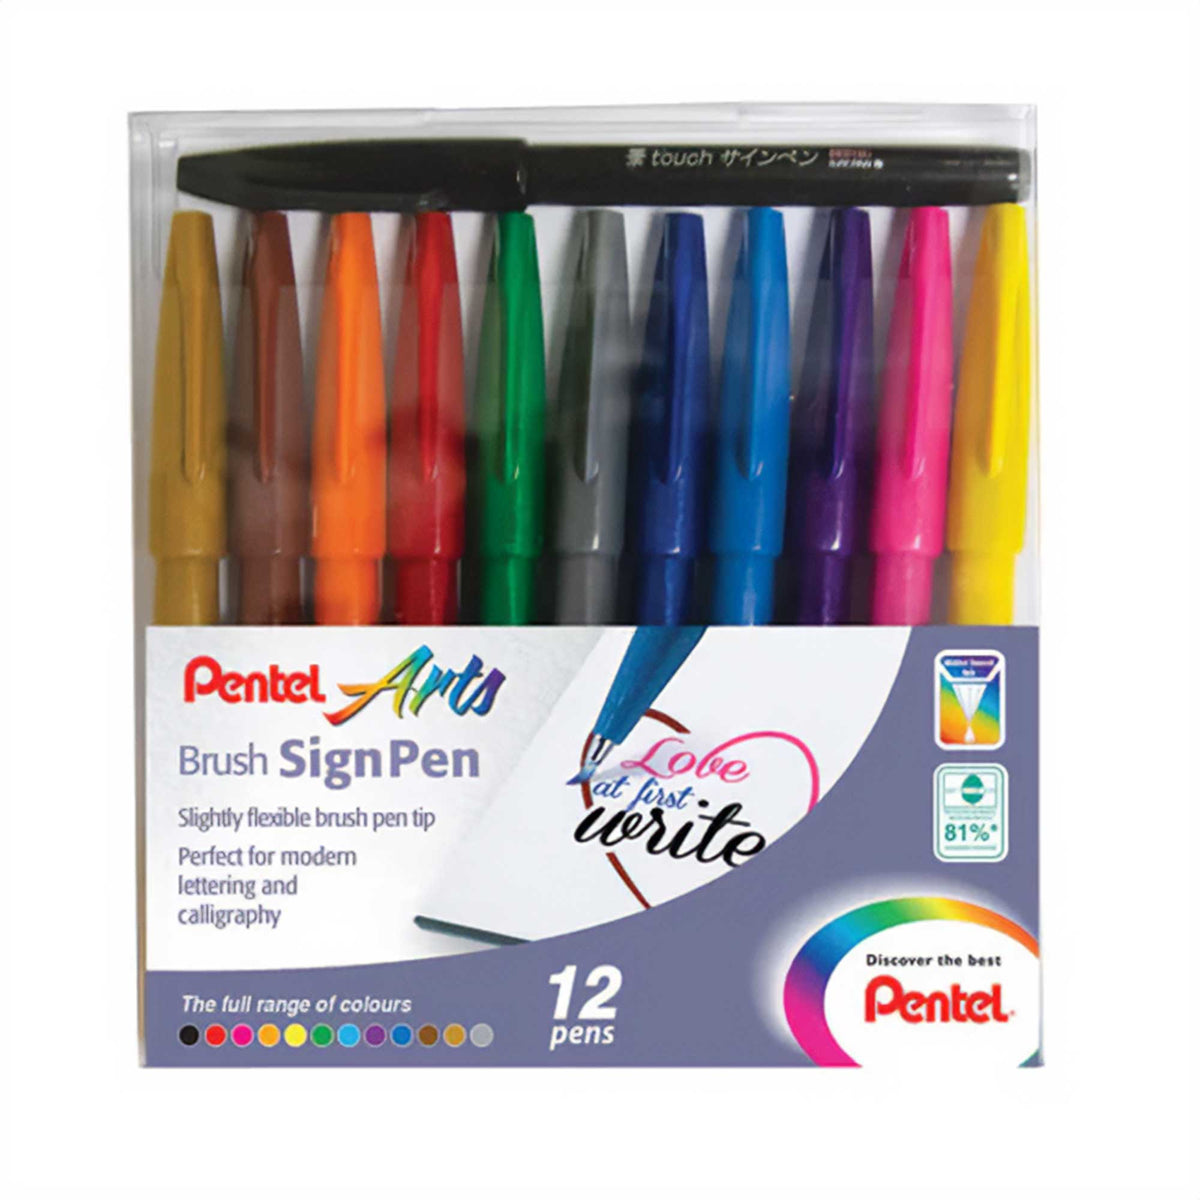 Pentel Arts Brush Sign Pen - Original